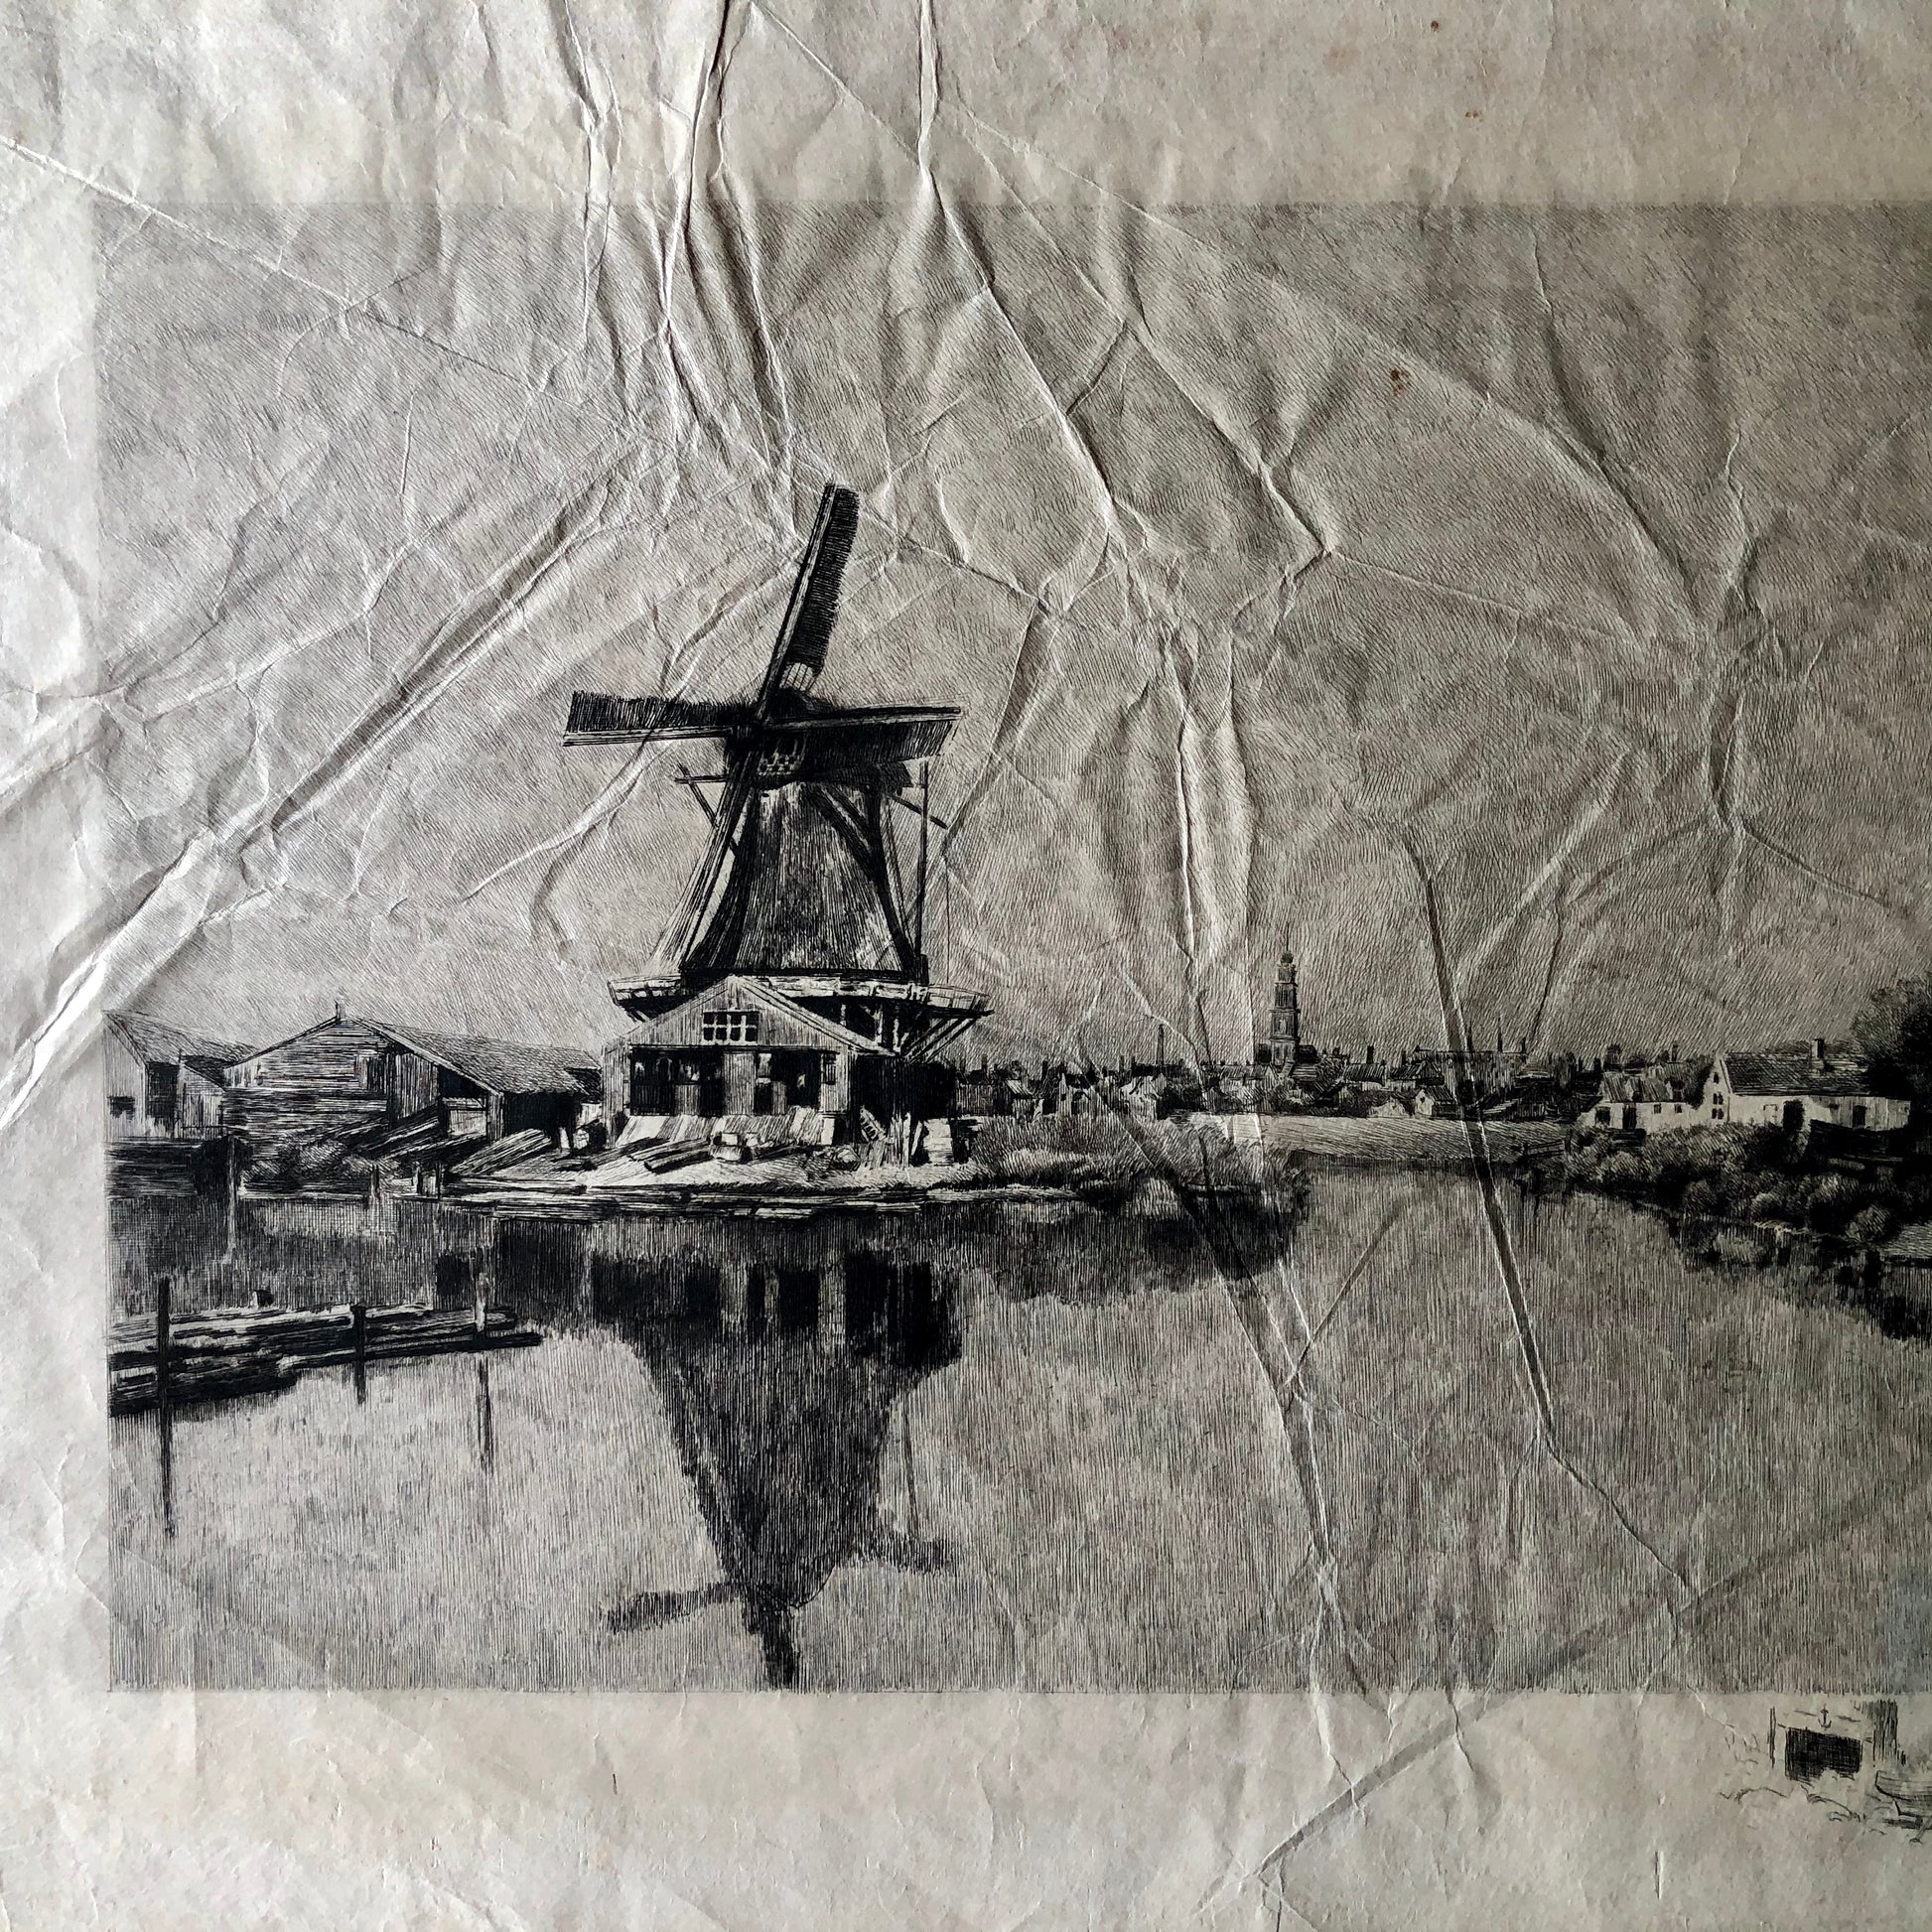 Art Etching of Dutch Port Scene on Rice Paper